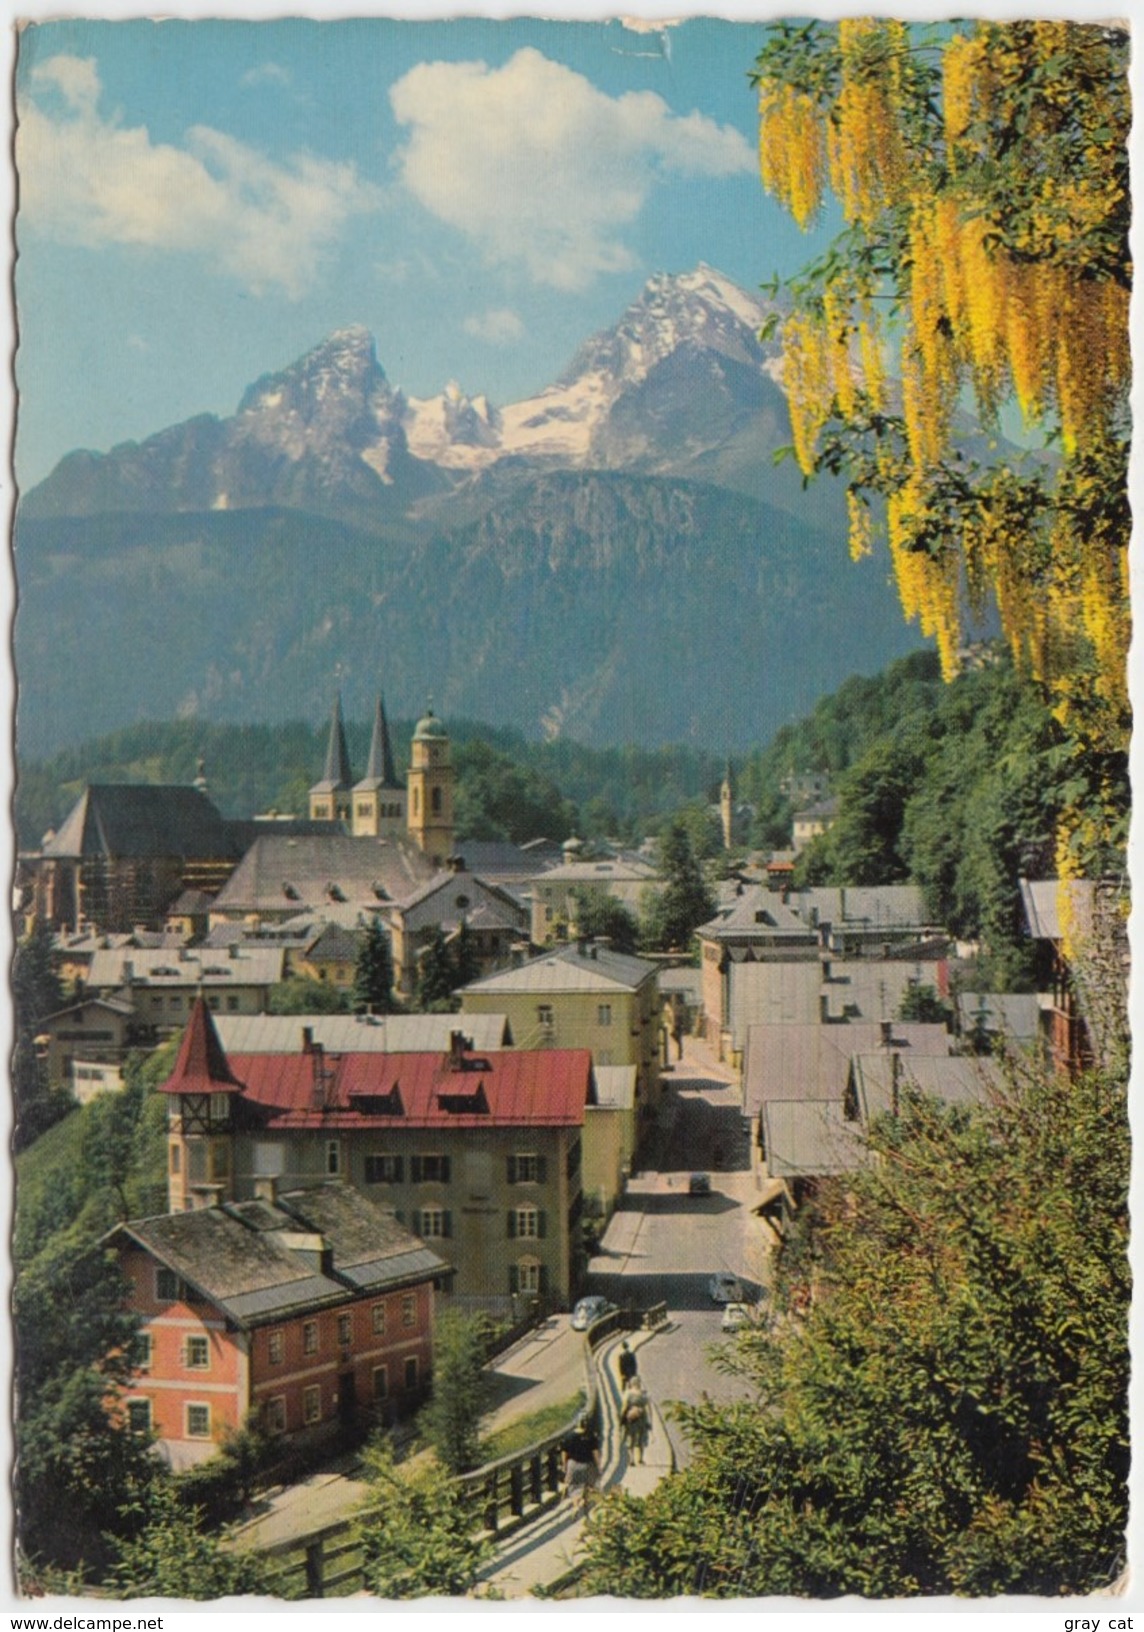 Berchtesgaden Mit Watzmann, Germany, 1967 Used Postcard [20595] - Berchtesgaden